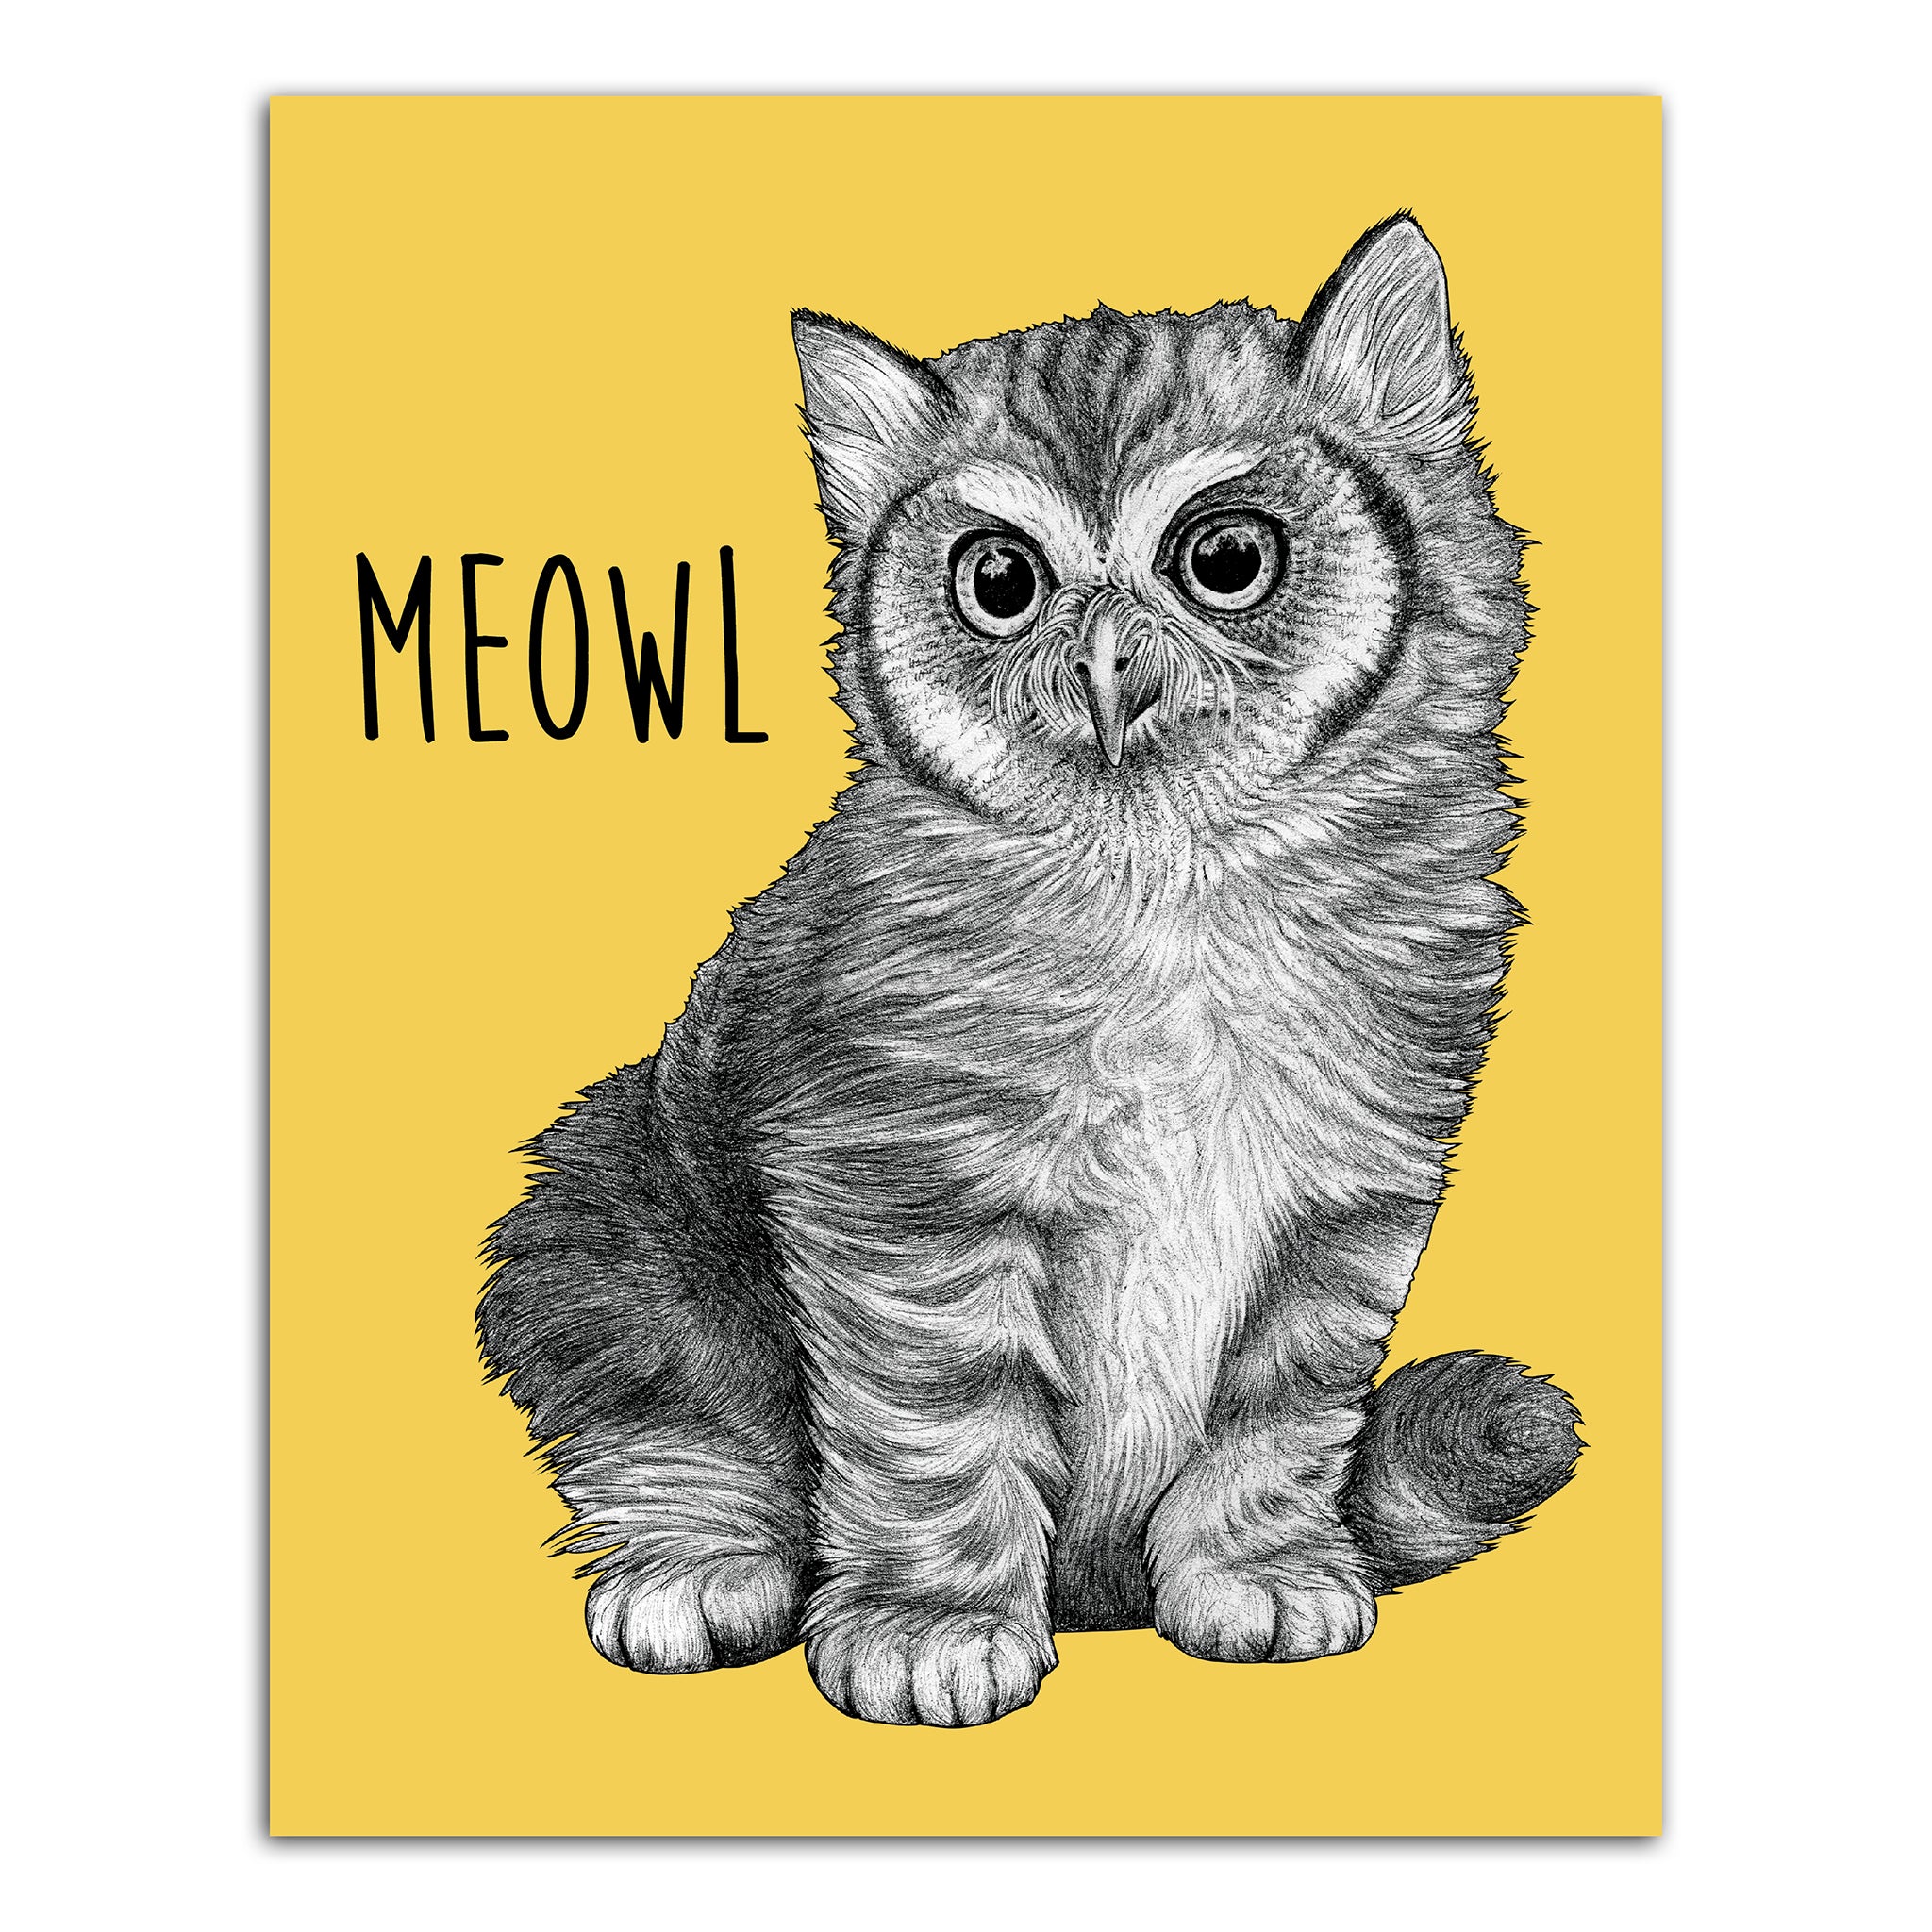 Meowl | Cat + Owl Hybrid Animal | 8x10" Color Print